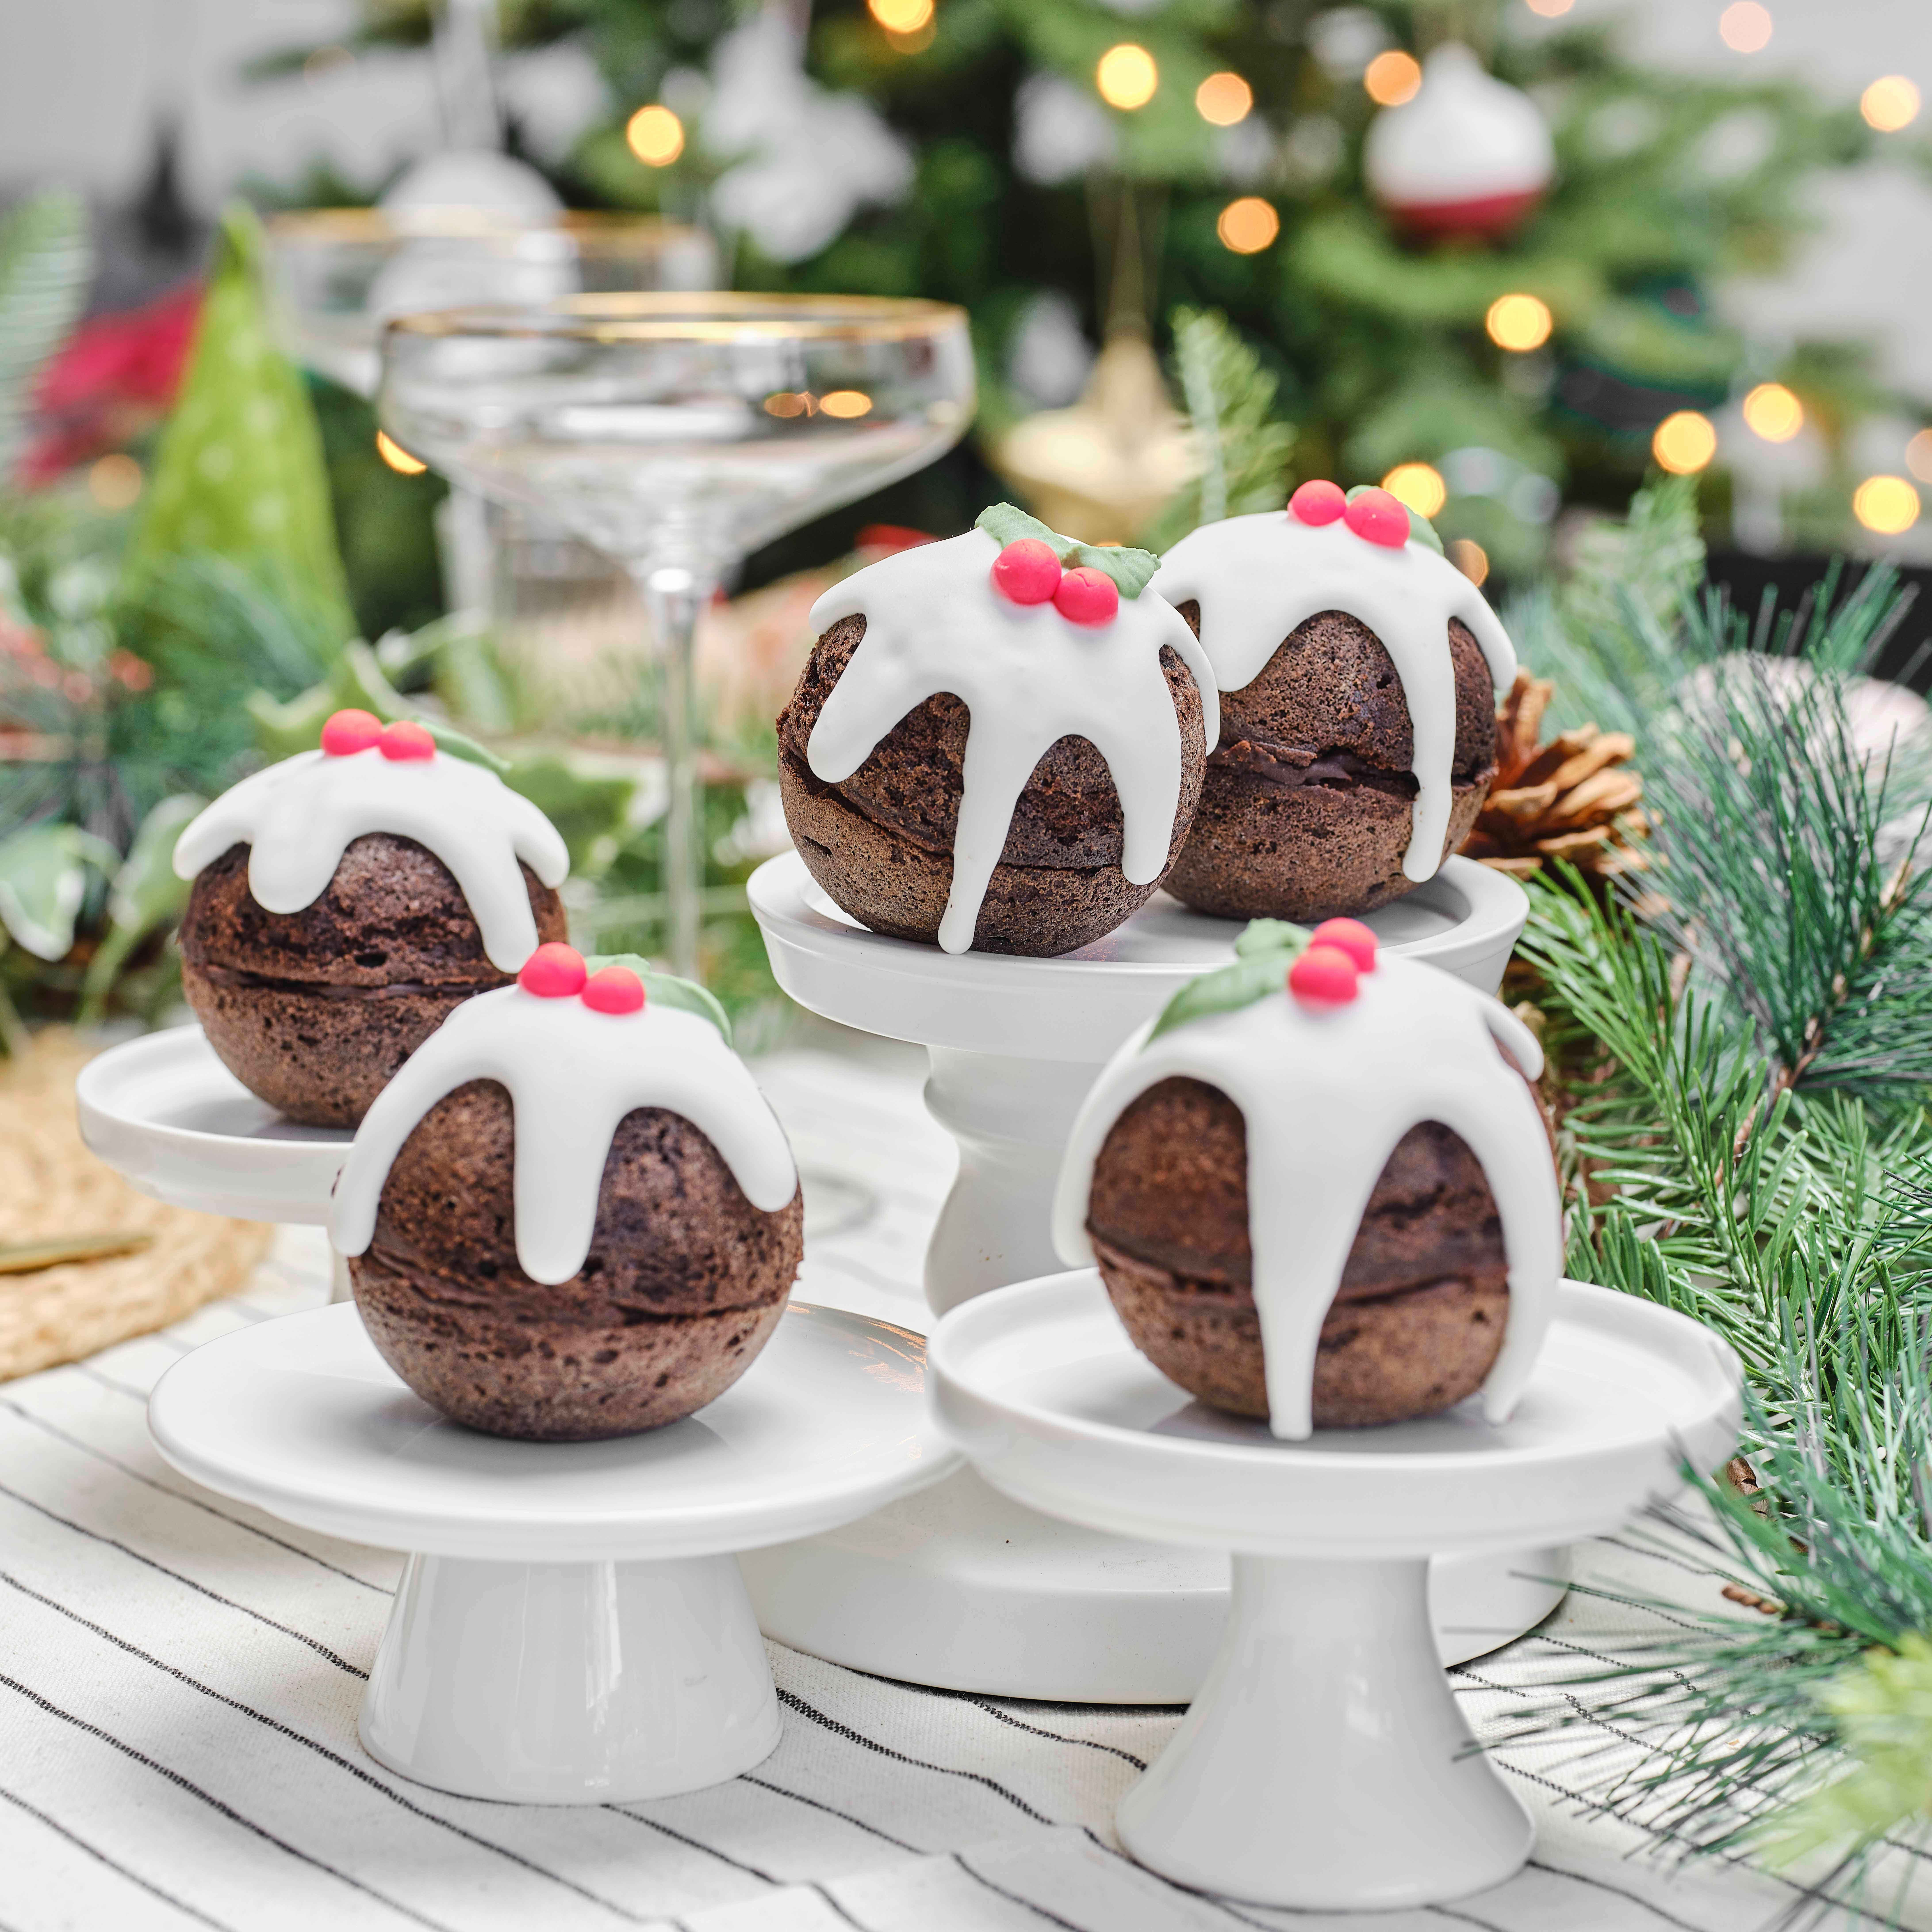 Christmas pudding fridge cake recipe - BBC Food